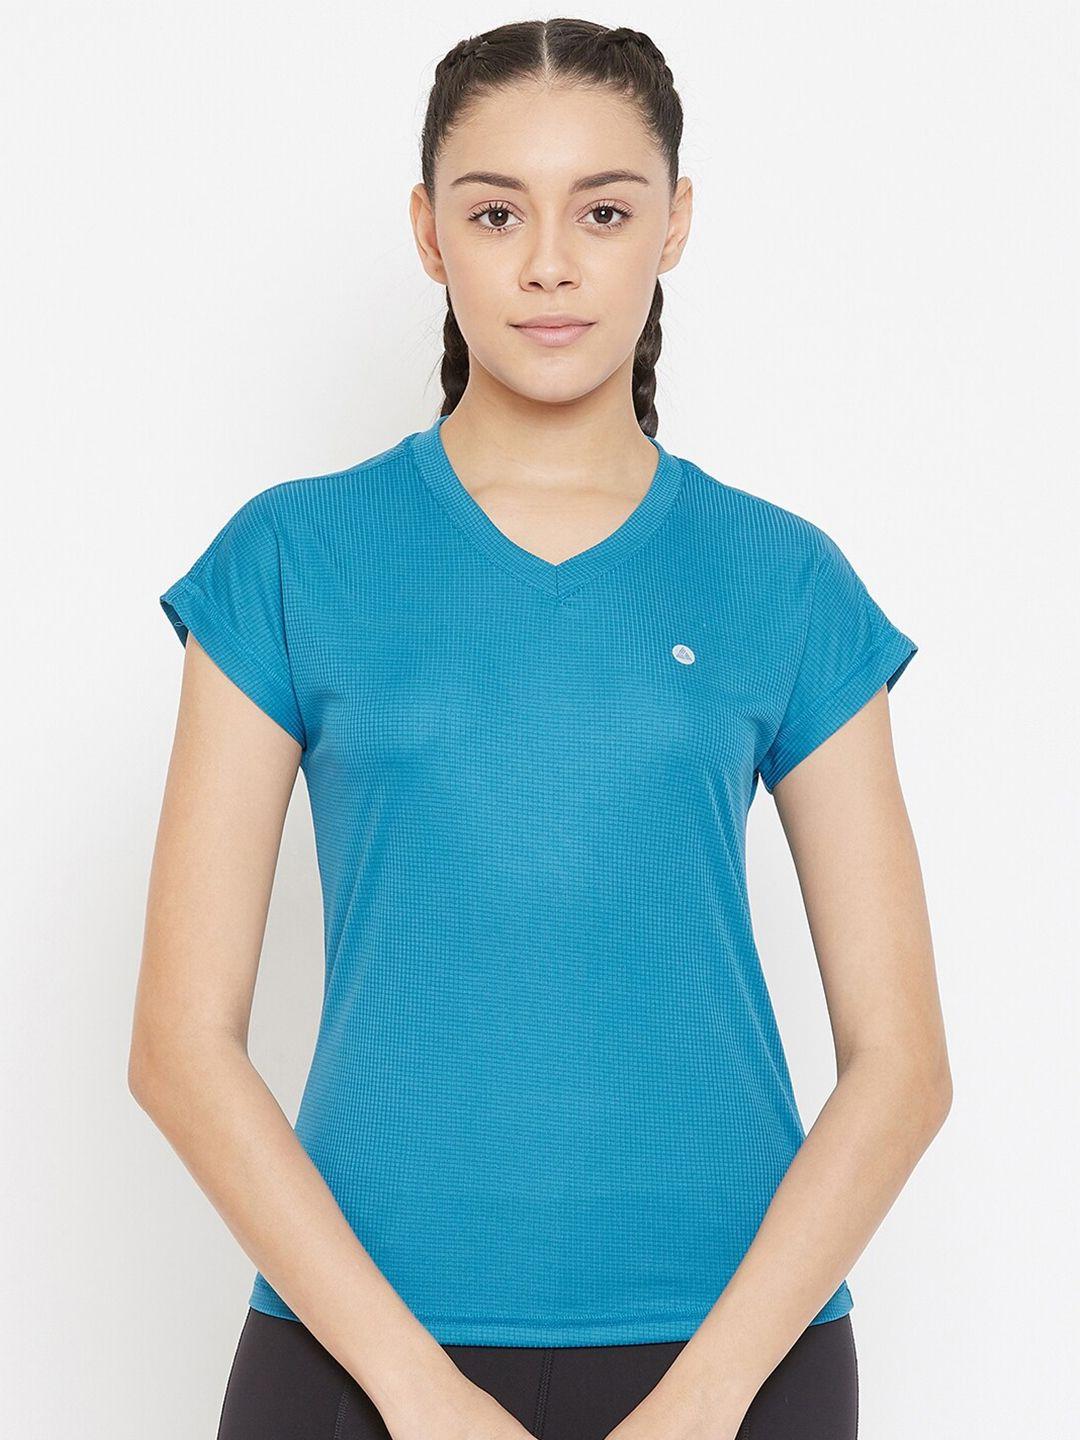 athlisis women blue checked lightweight quick dry v-neck running t-shirt